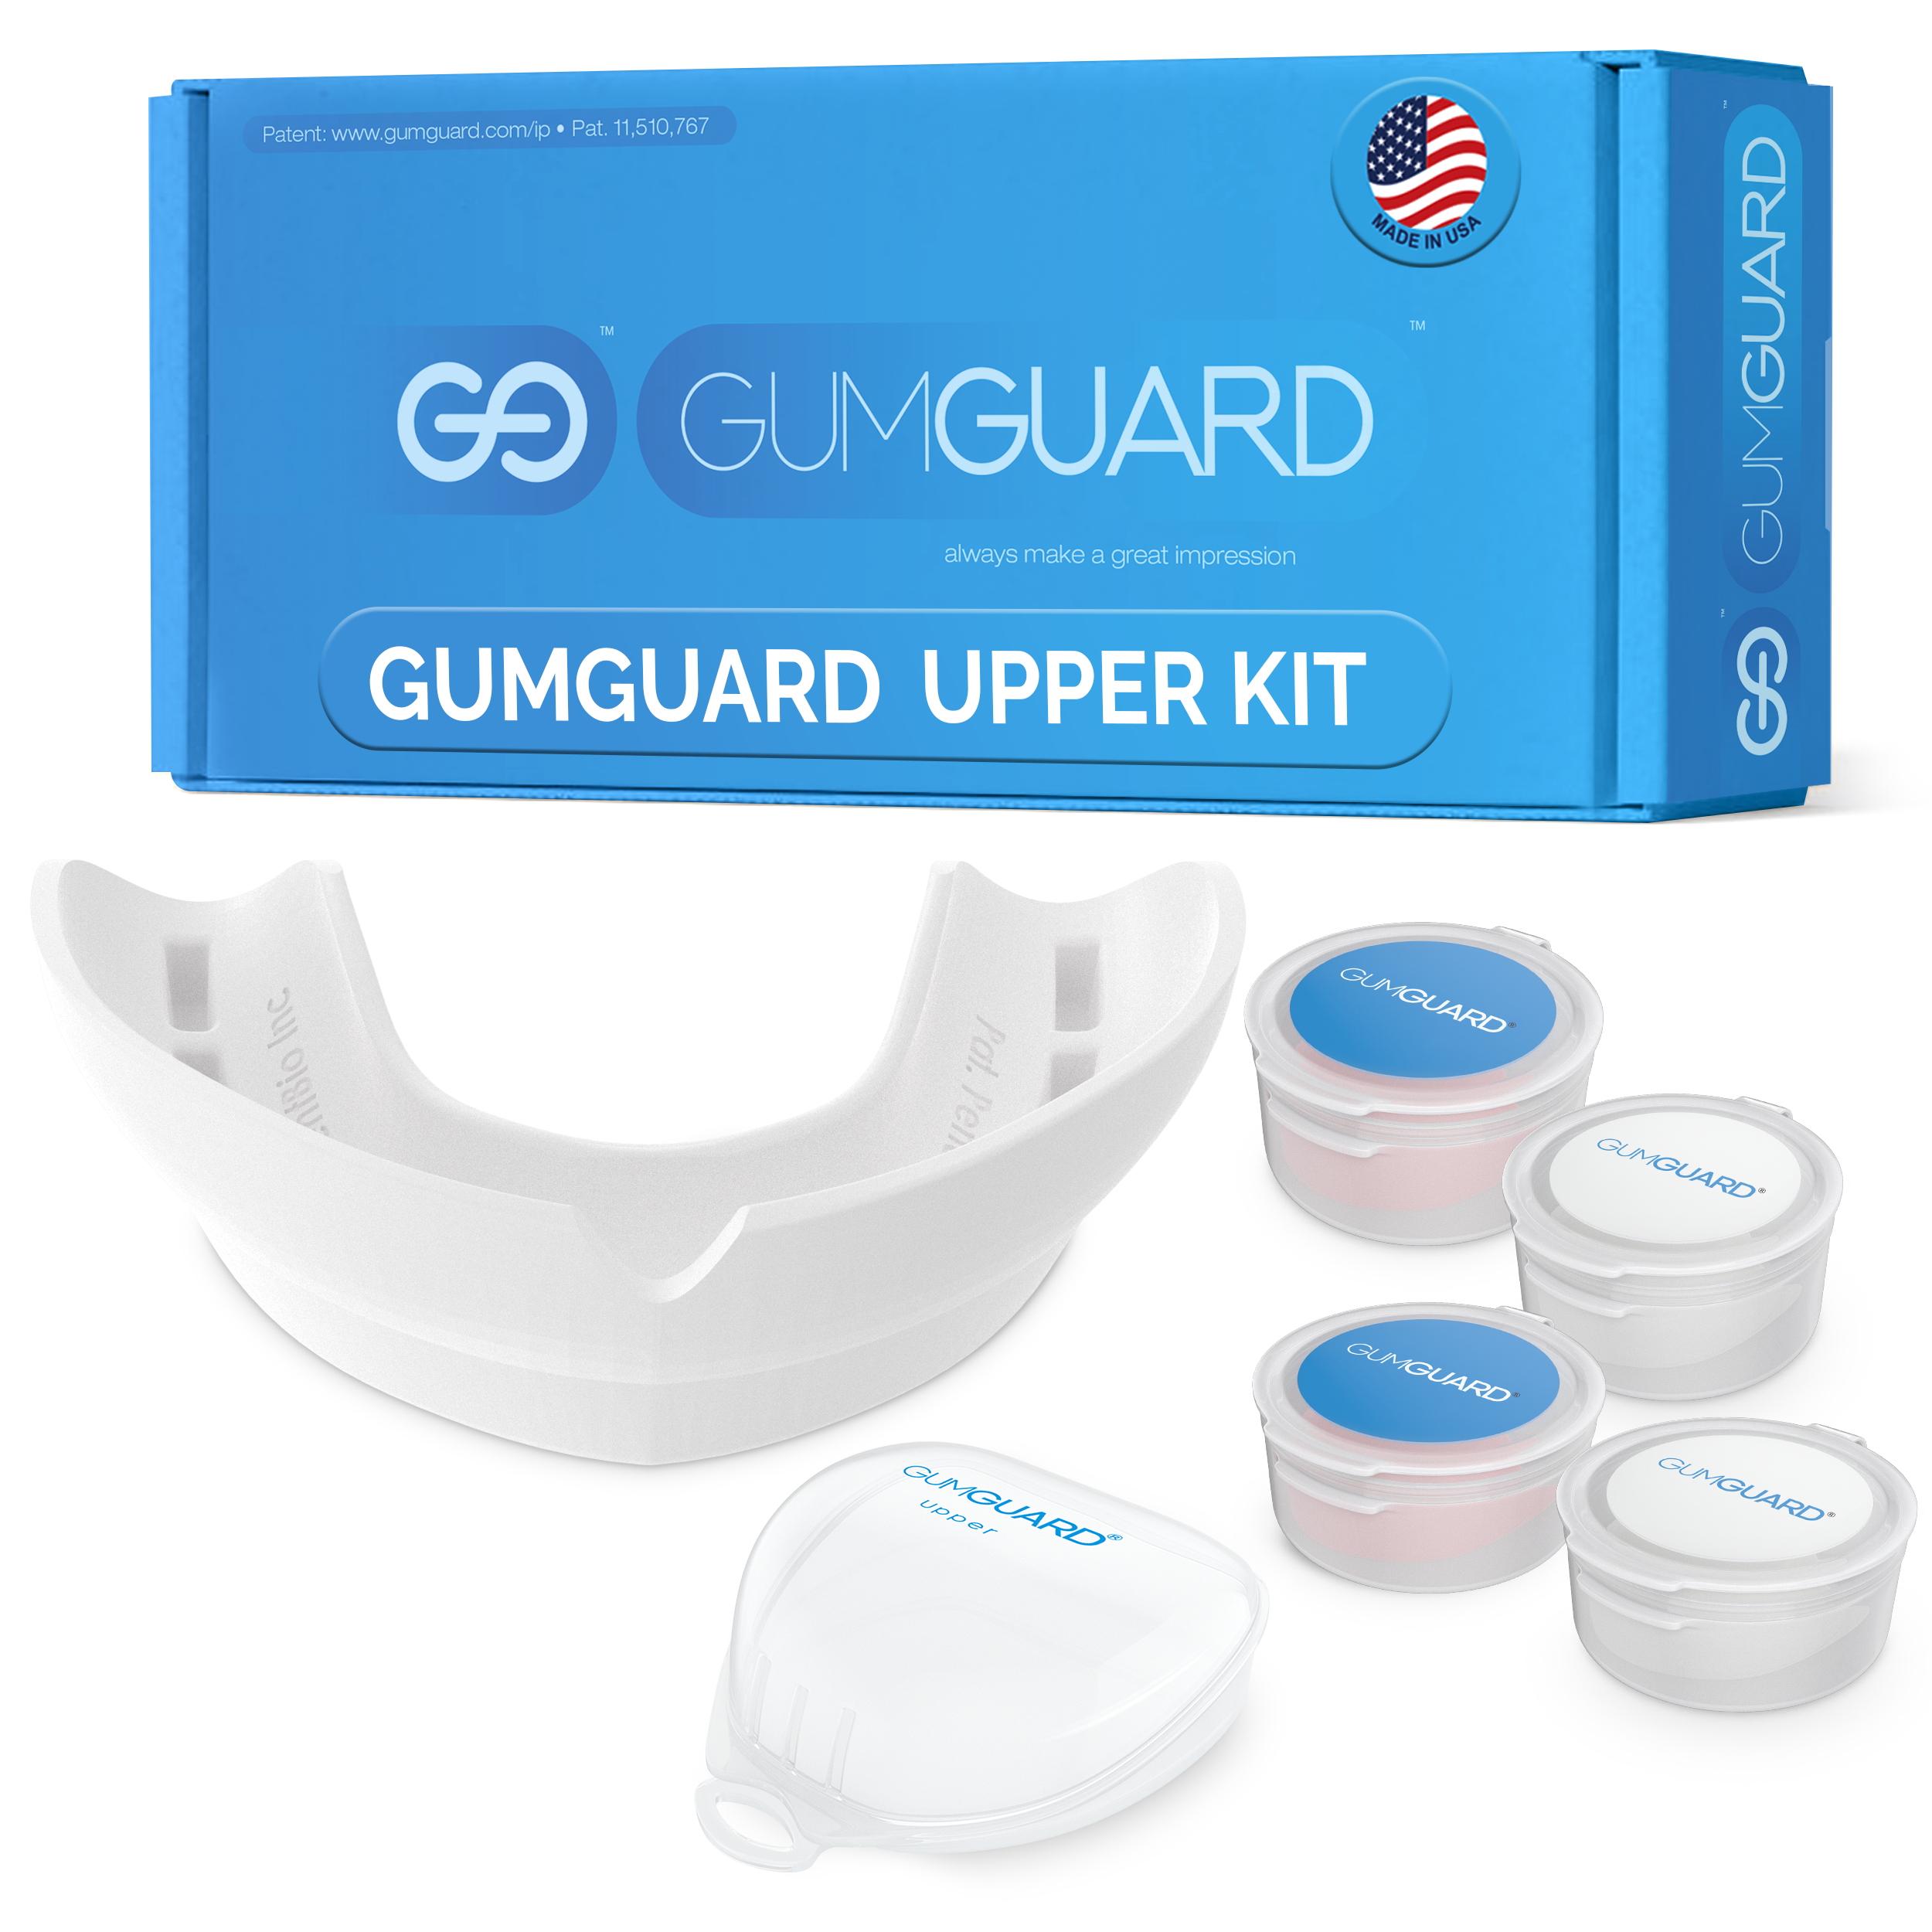 GumGuard®PM UltraSoft Upper | White